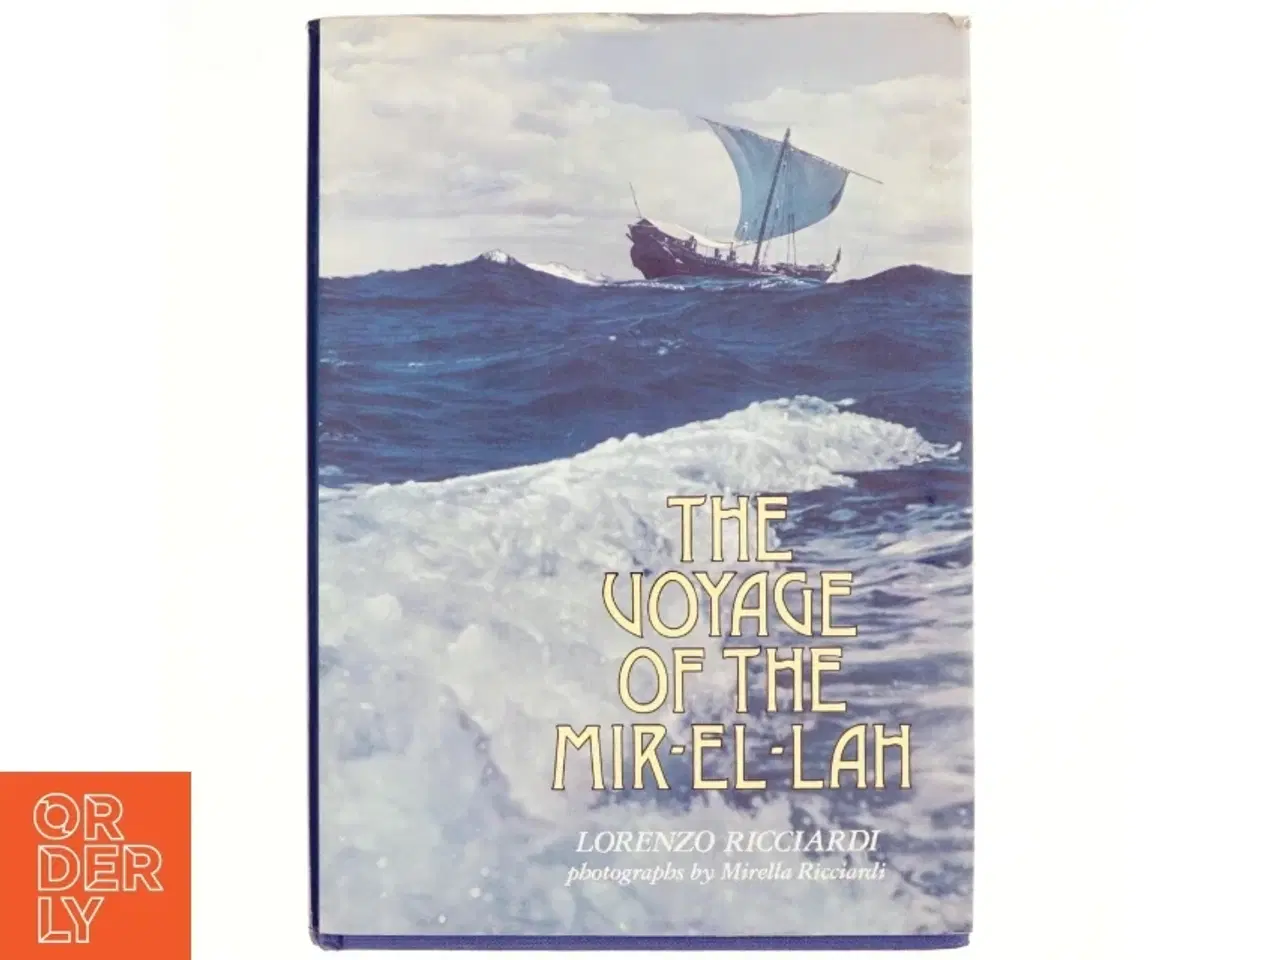 Billede 1 - The Voyage of The Mir-El-Lah af Lorenzo Ricciardi (bog)